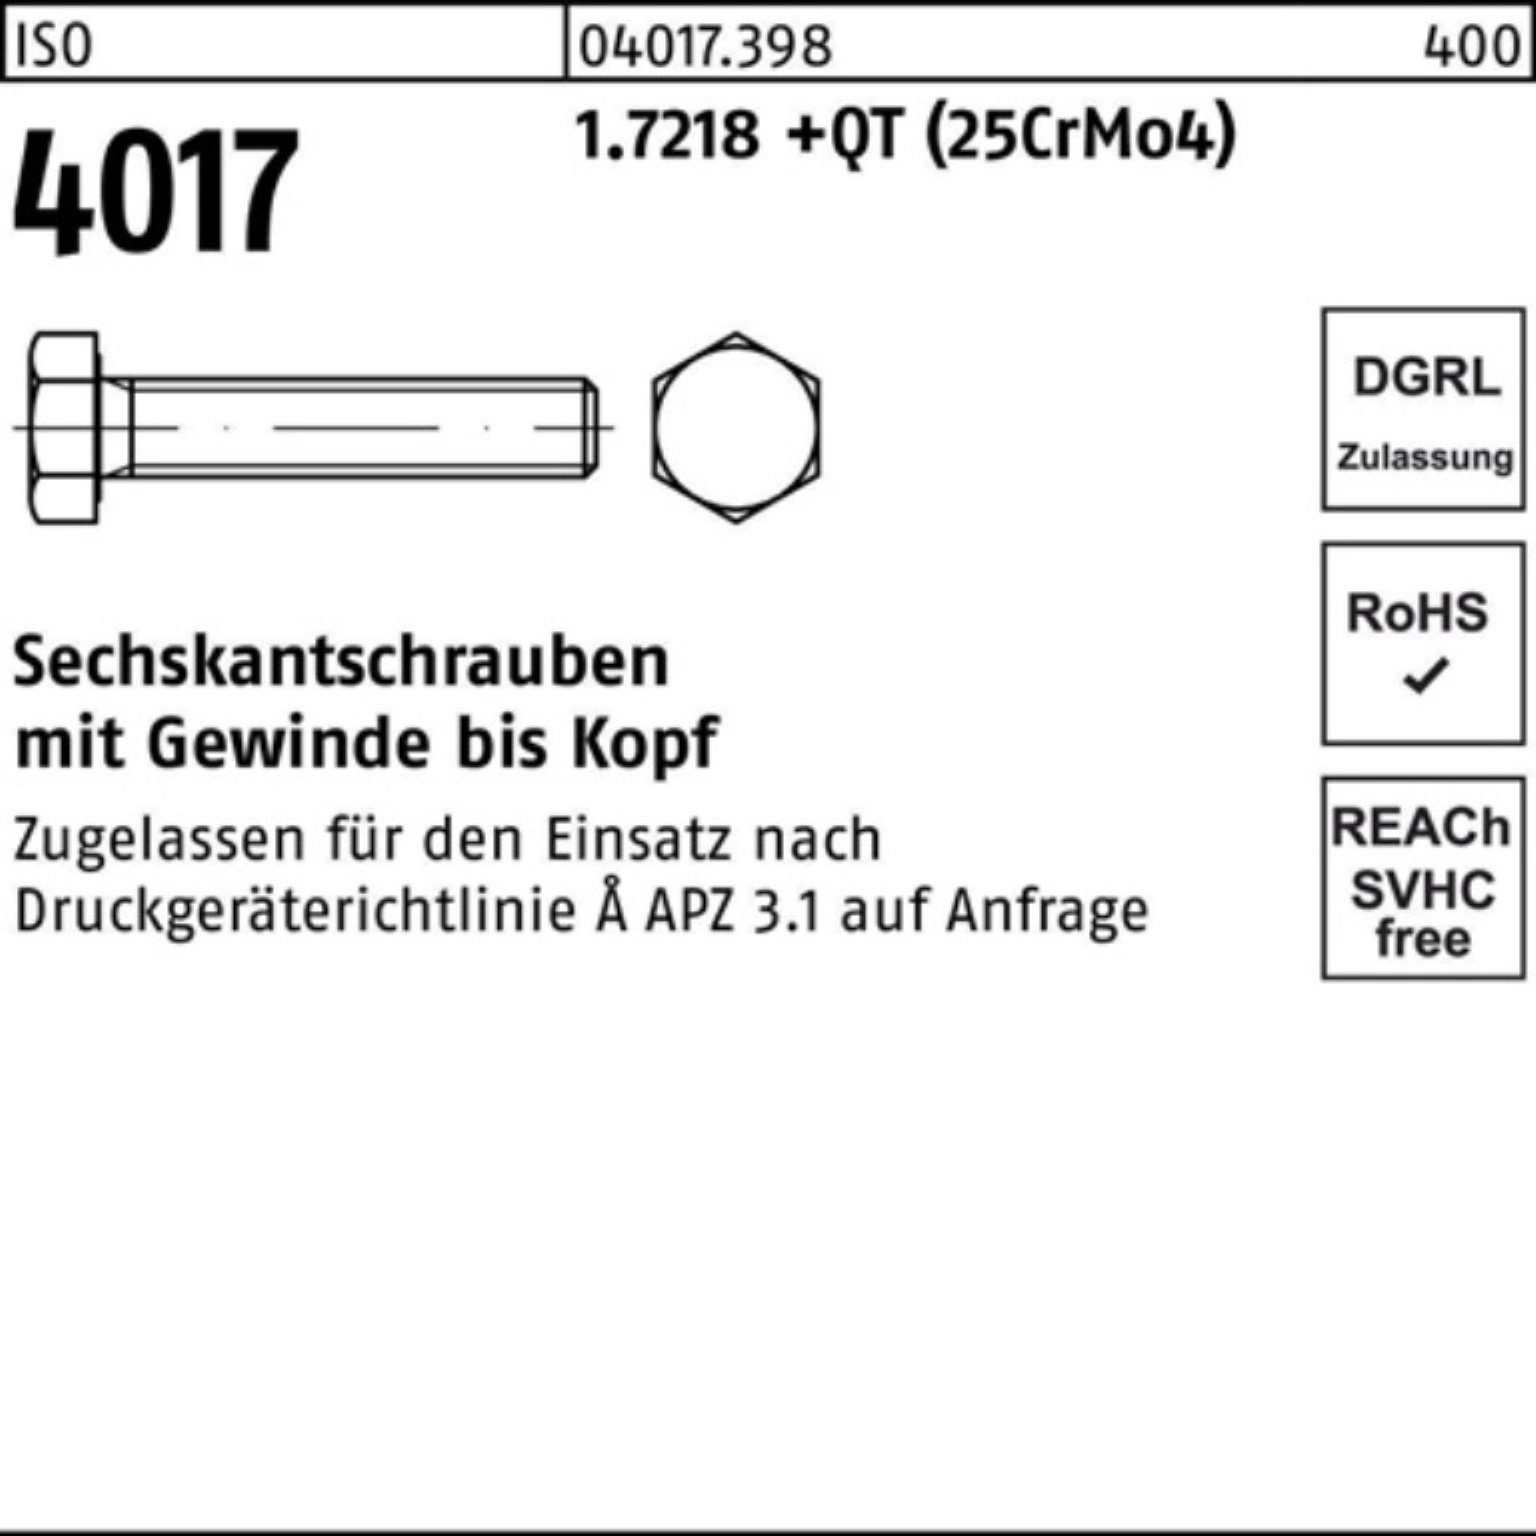 4017 Pack 100 100er VG 1.7218 Sechskantschraube ISO Bufab Sechskantschraube M12x +QT (25CrMo4)